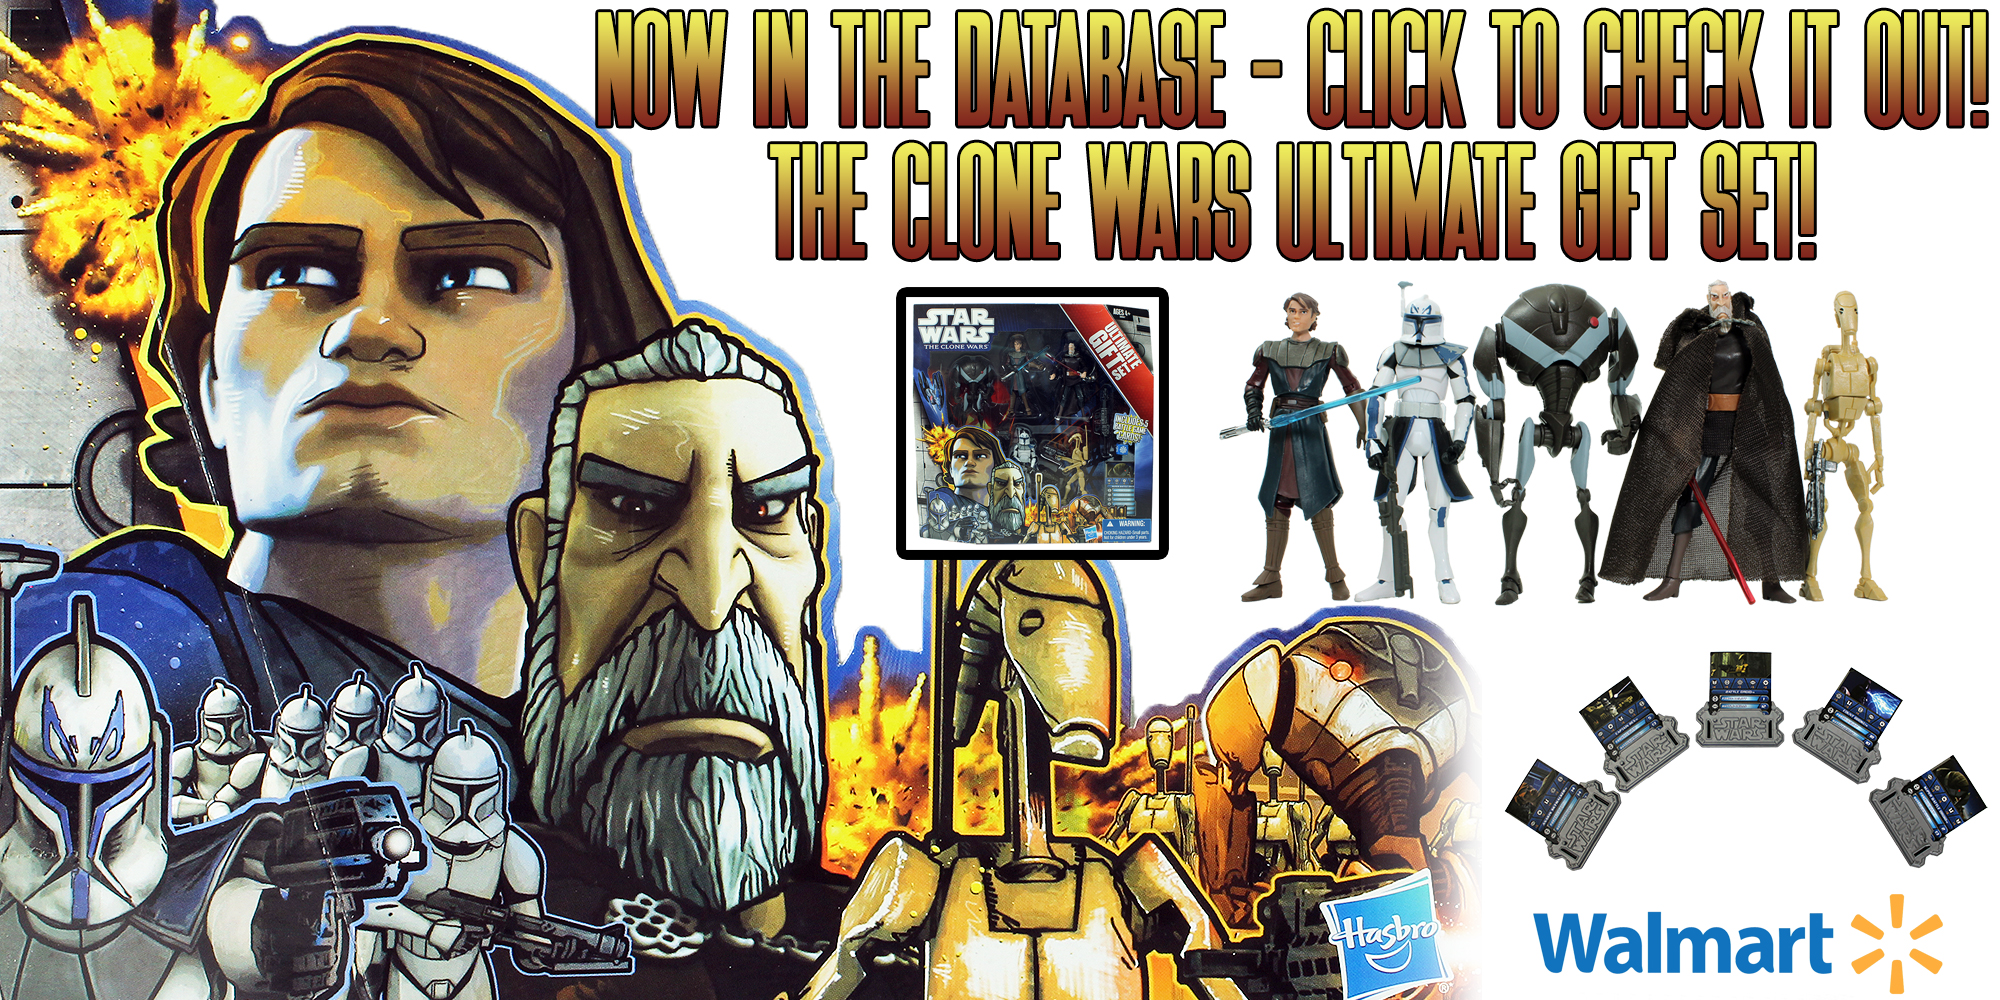 Clone Wars Ultimate Gift Set